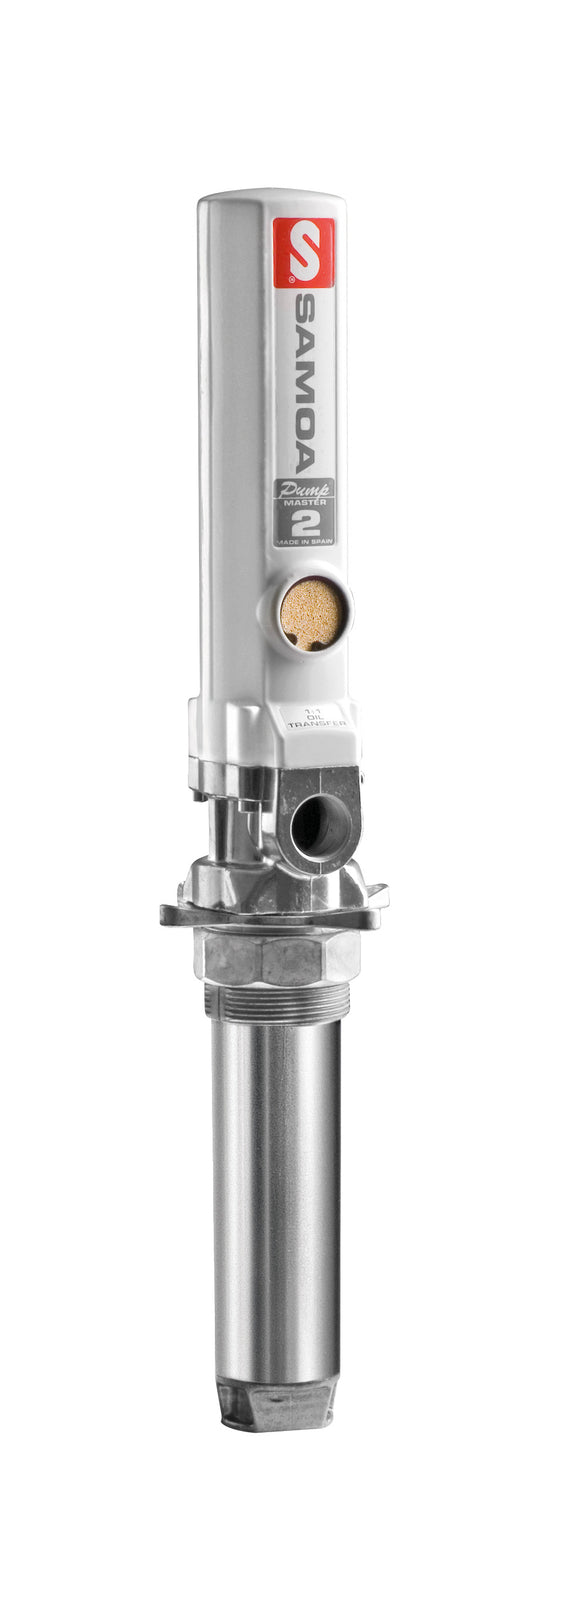 SAMOA® Pumpmaster 2, 1:1 Ratio Oil Pump - Universal Stub Pump